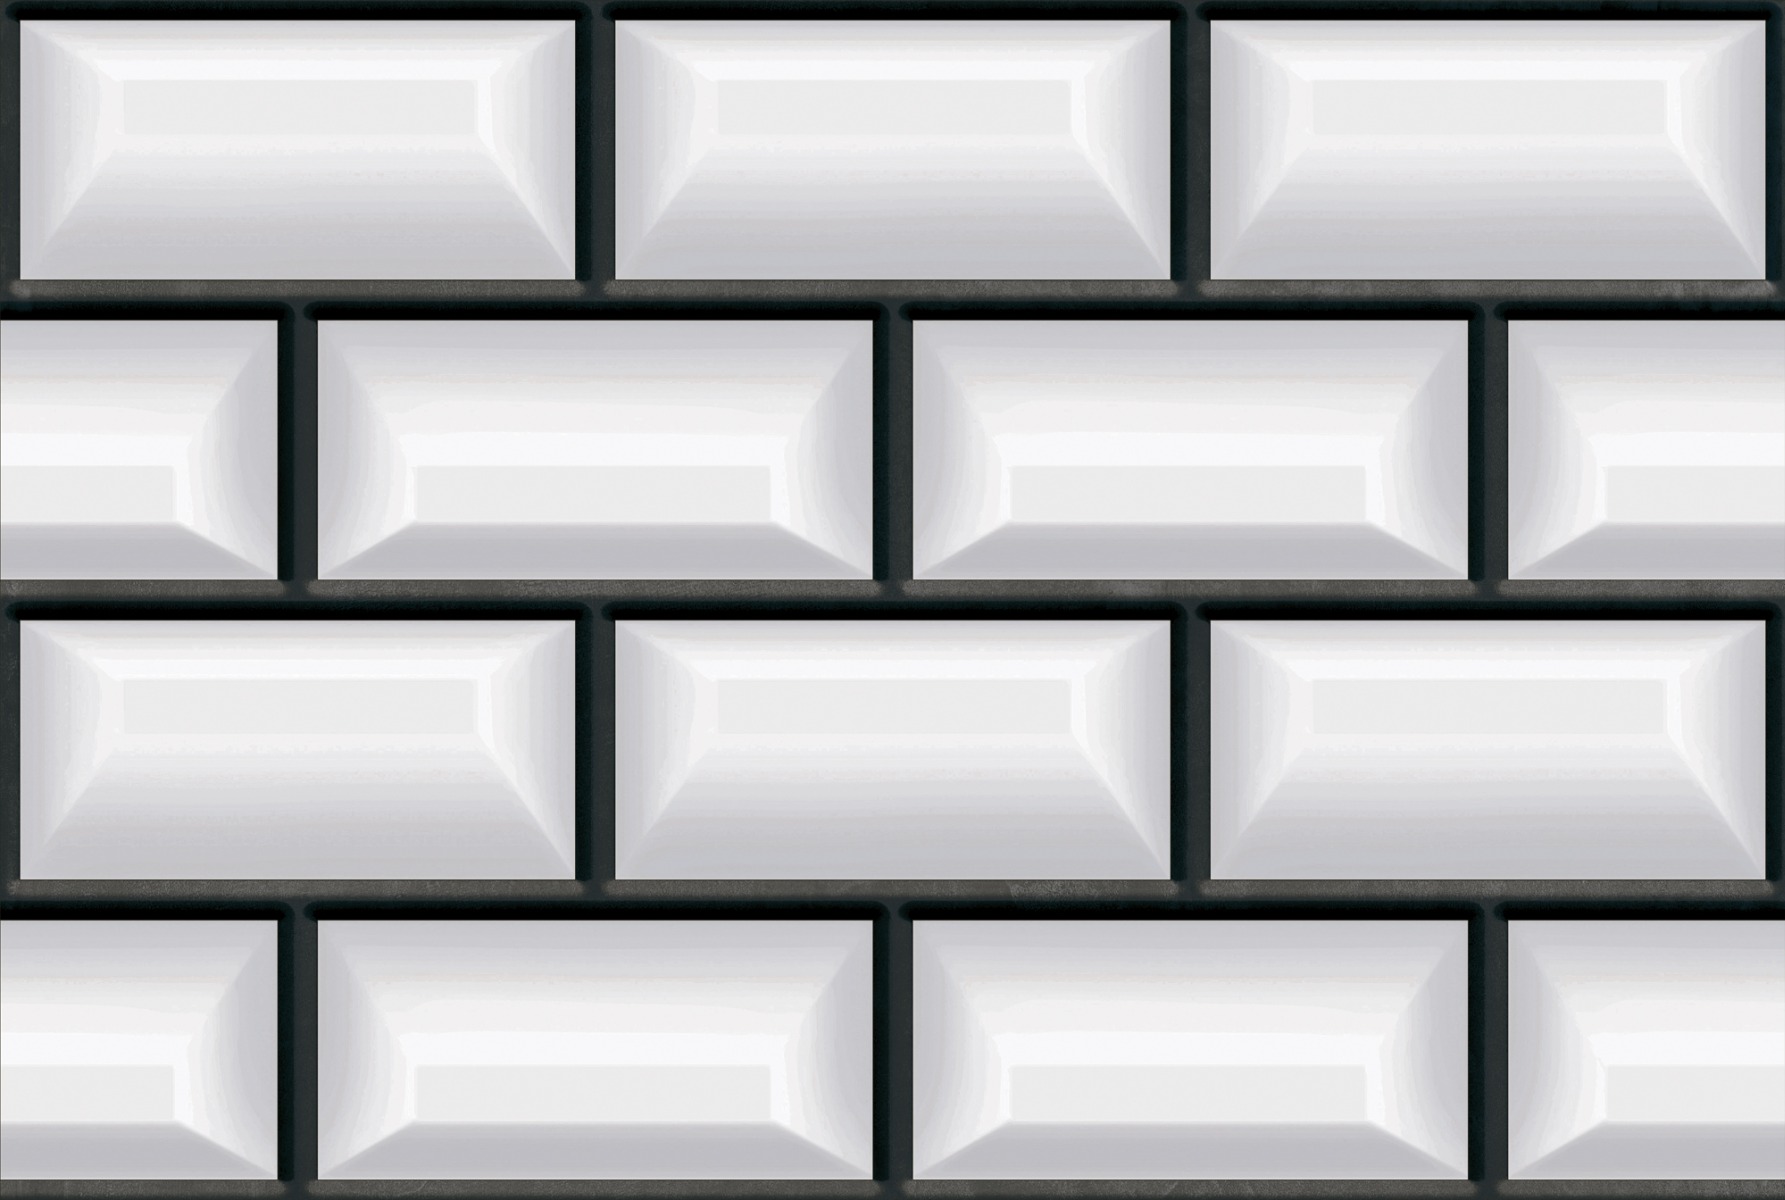 250x375 Tiles for Elevation Tiles, Accent Tiles, Outdoor Tiles, Bar/Restaurant